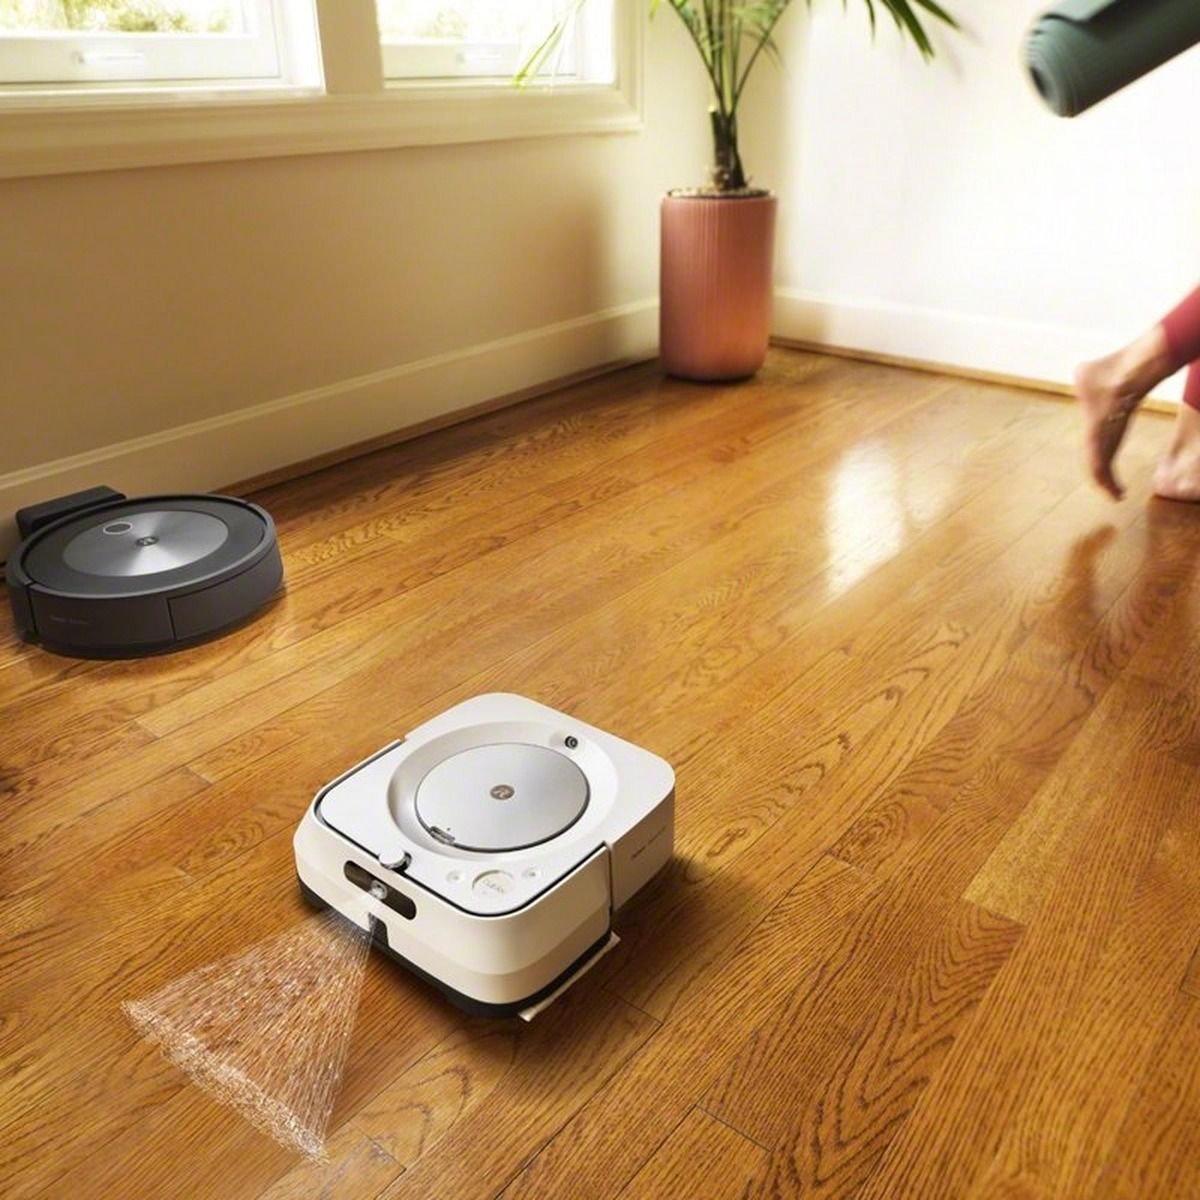 مكنسة روبوت كهربائية اي روبوت 0.4 لتر IRobot Roomba J7 Robot Vacuum Cleaner